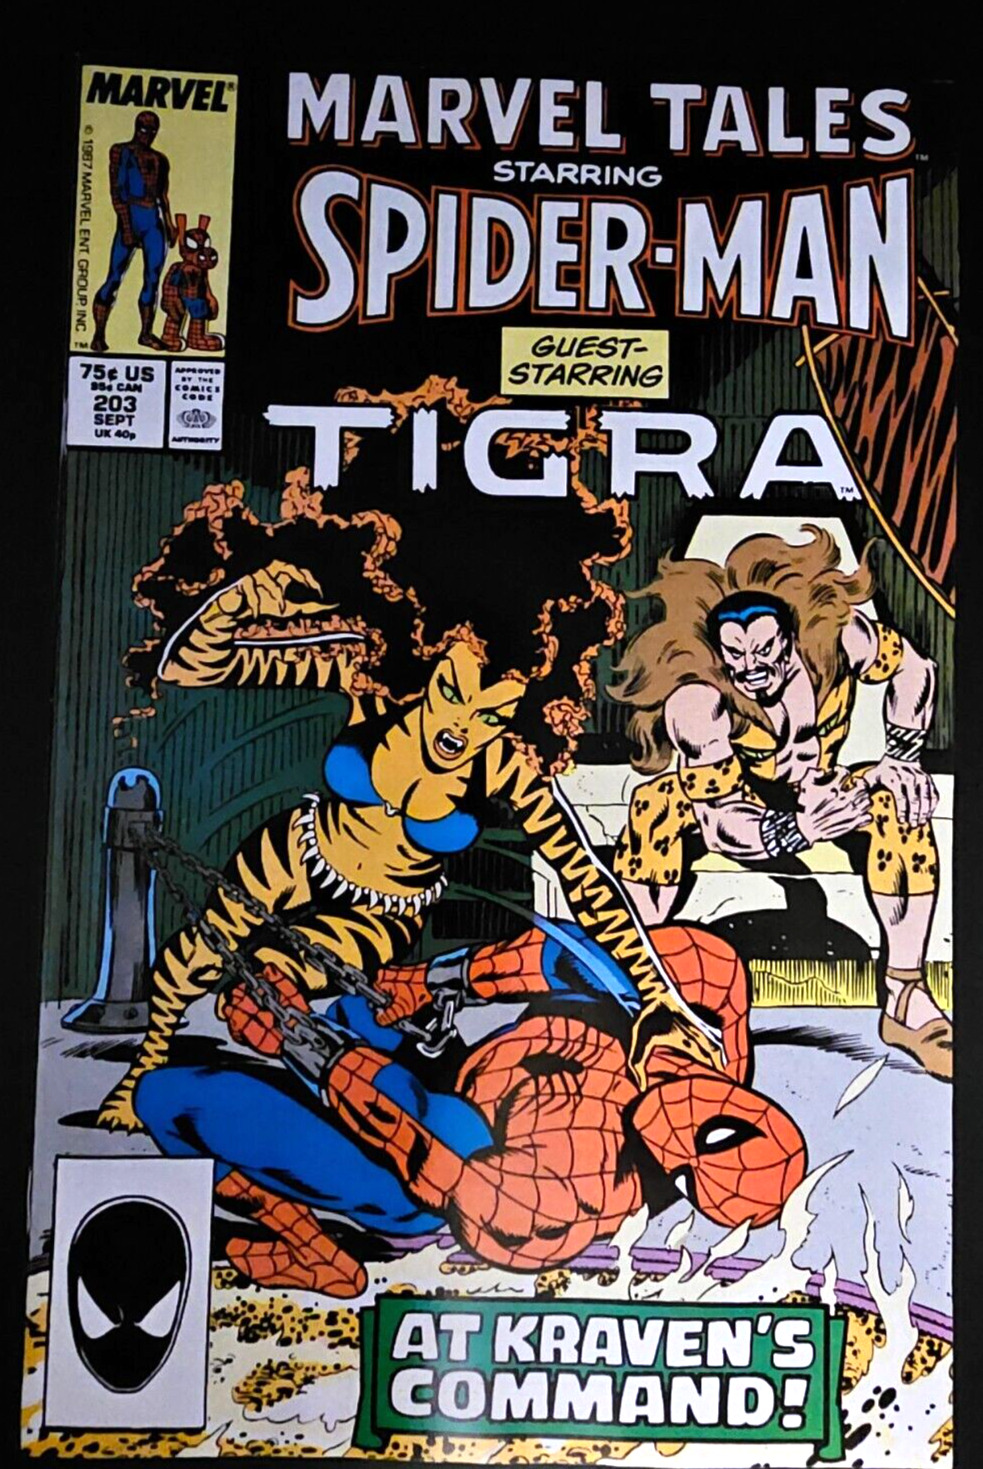 MARVEL TALES Starring SPIDER-MAN # 203 1987 RAW Reprint: Marvel Team Up #67